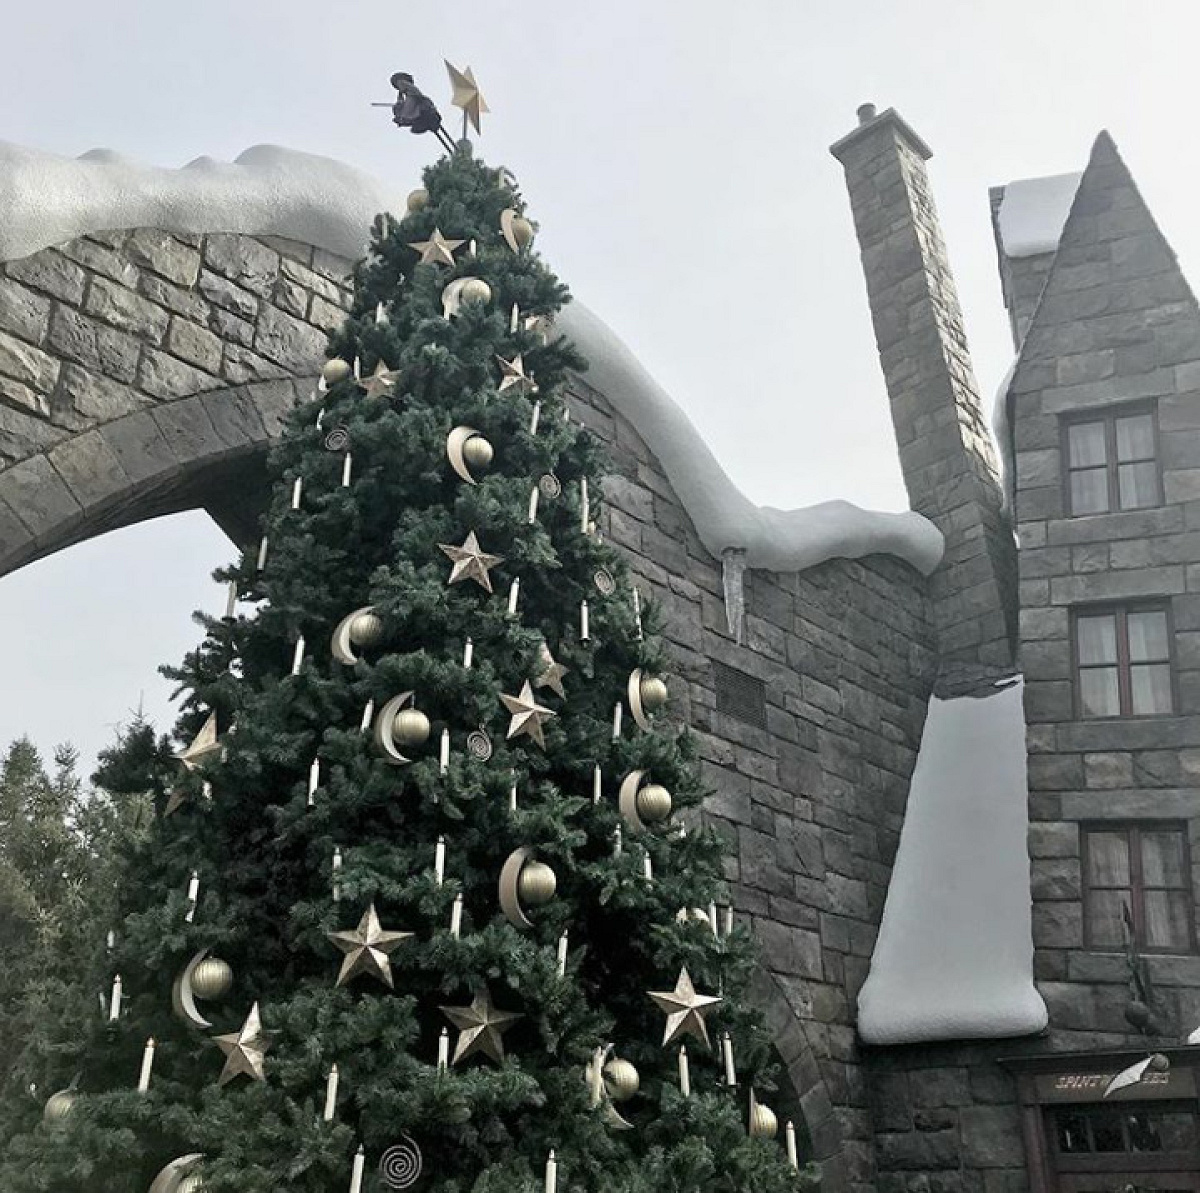 USJハリーポッターエリア/魔法界のクリスマスツリー